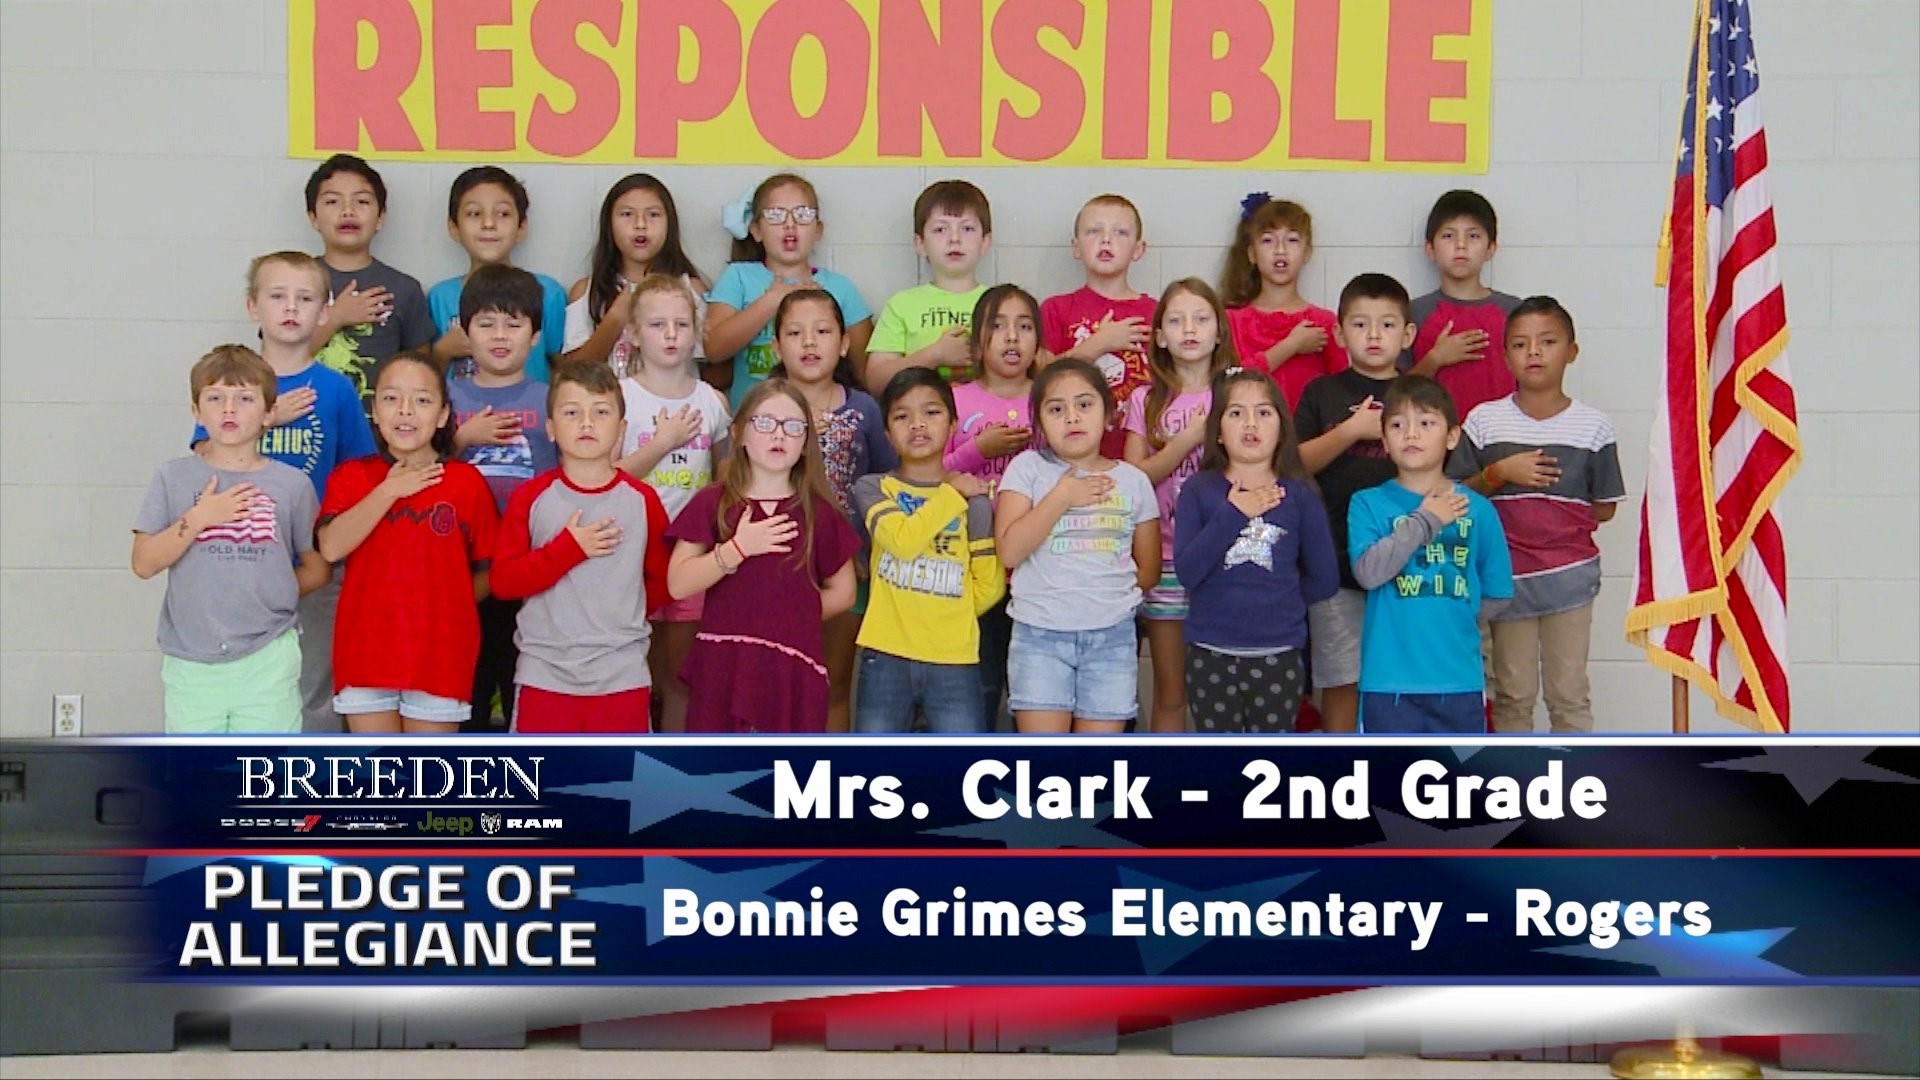 Mrs. Clark  2nd Grade Bonnie Grimes Elementary, Rogers